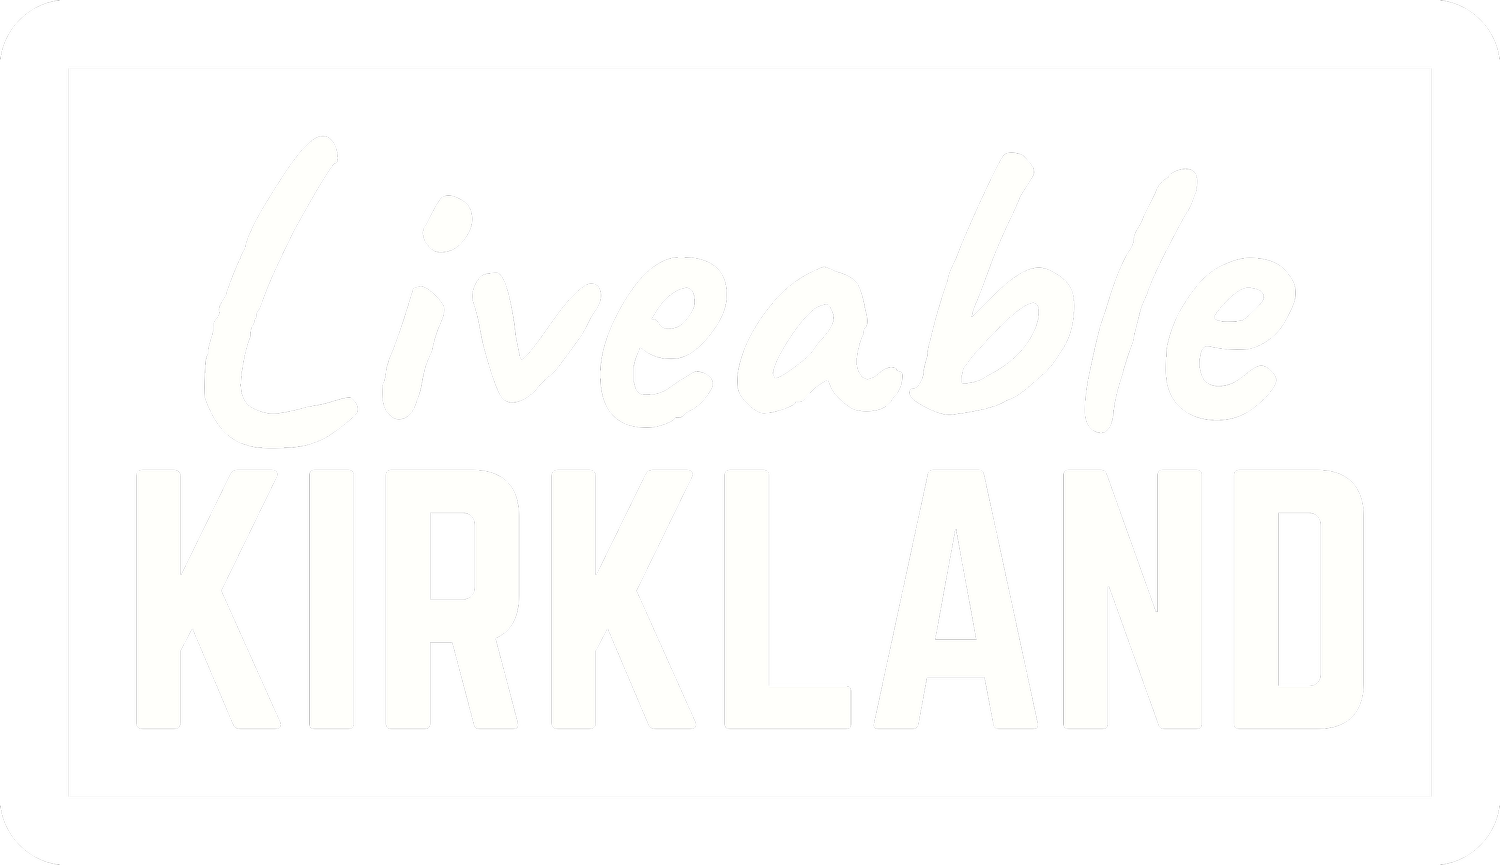 Liveable Kirkland